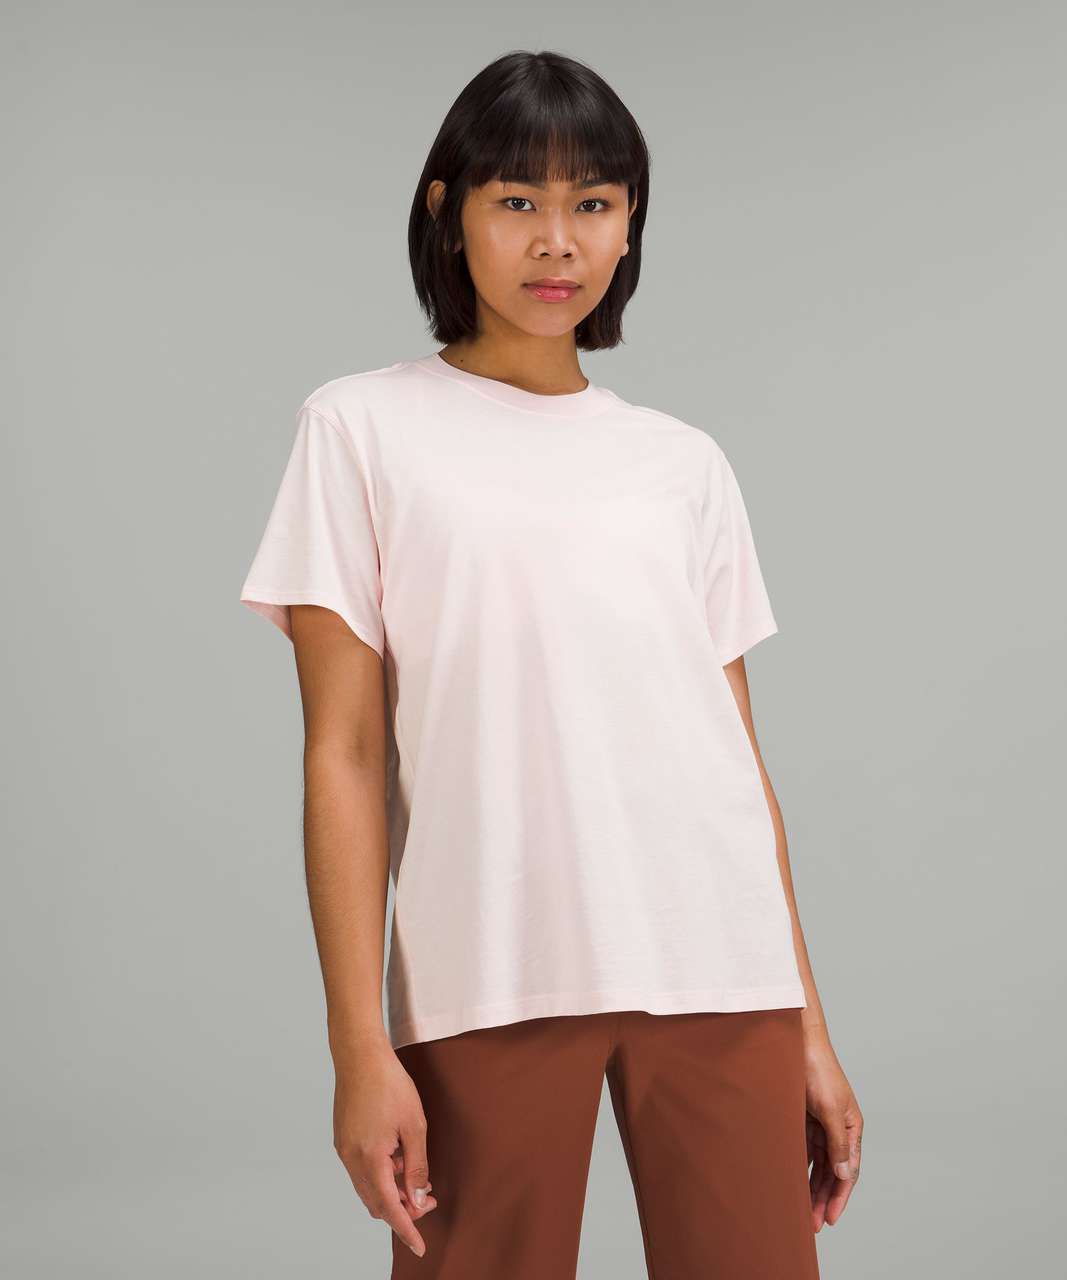 Lululemon All Yours Cotton T-Shirt - Strawberry Milkshake (First Release)